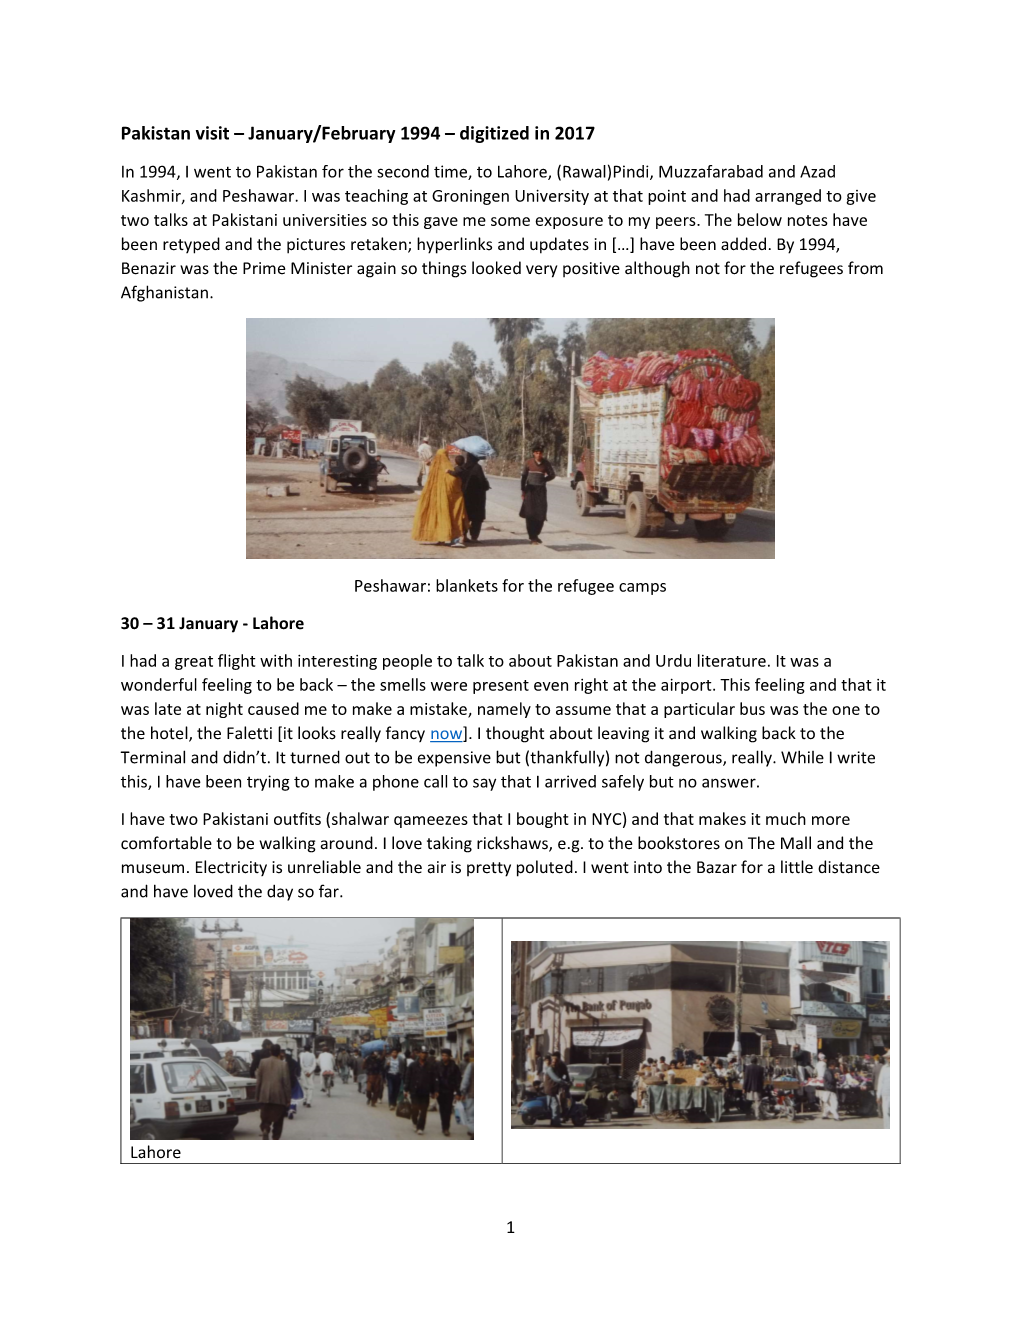 Pakistan Visit – January/February 1994 – Digitized in 2017